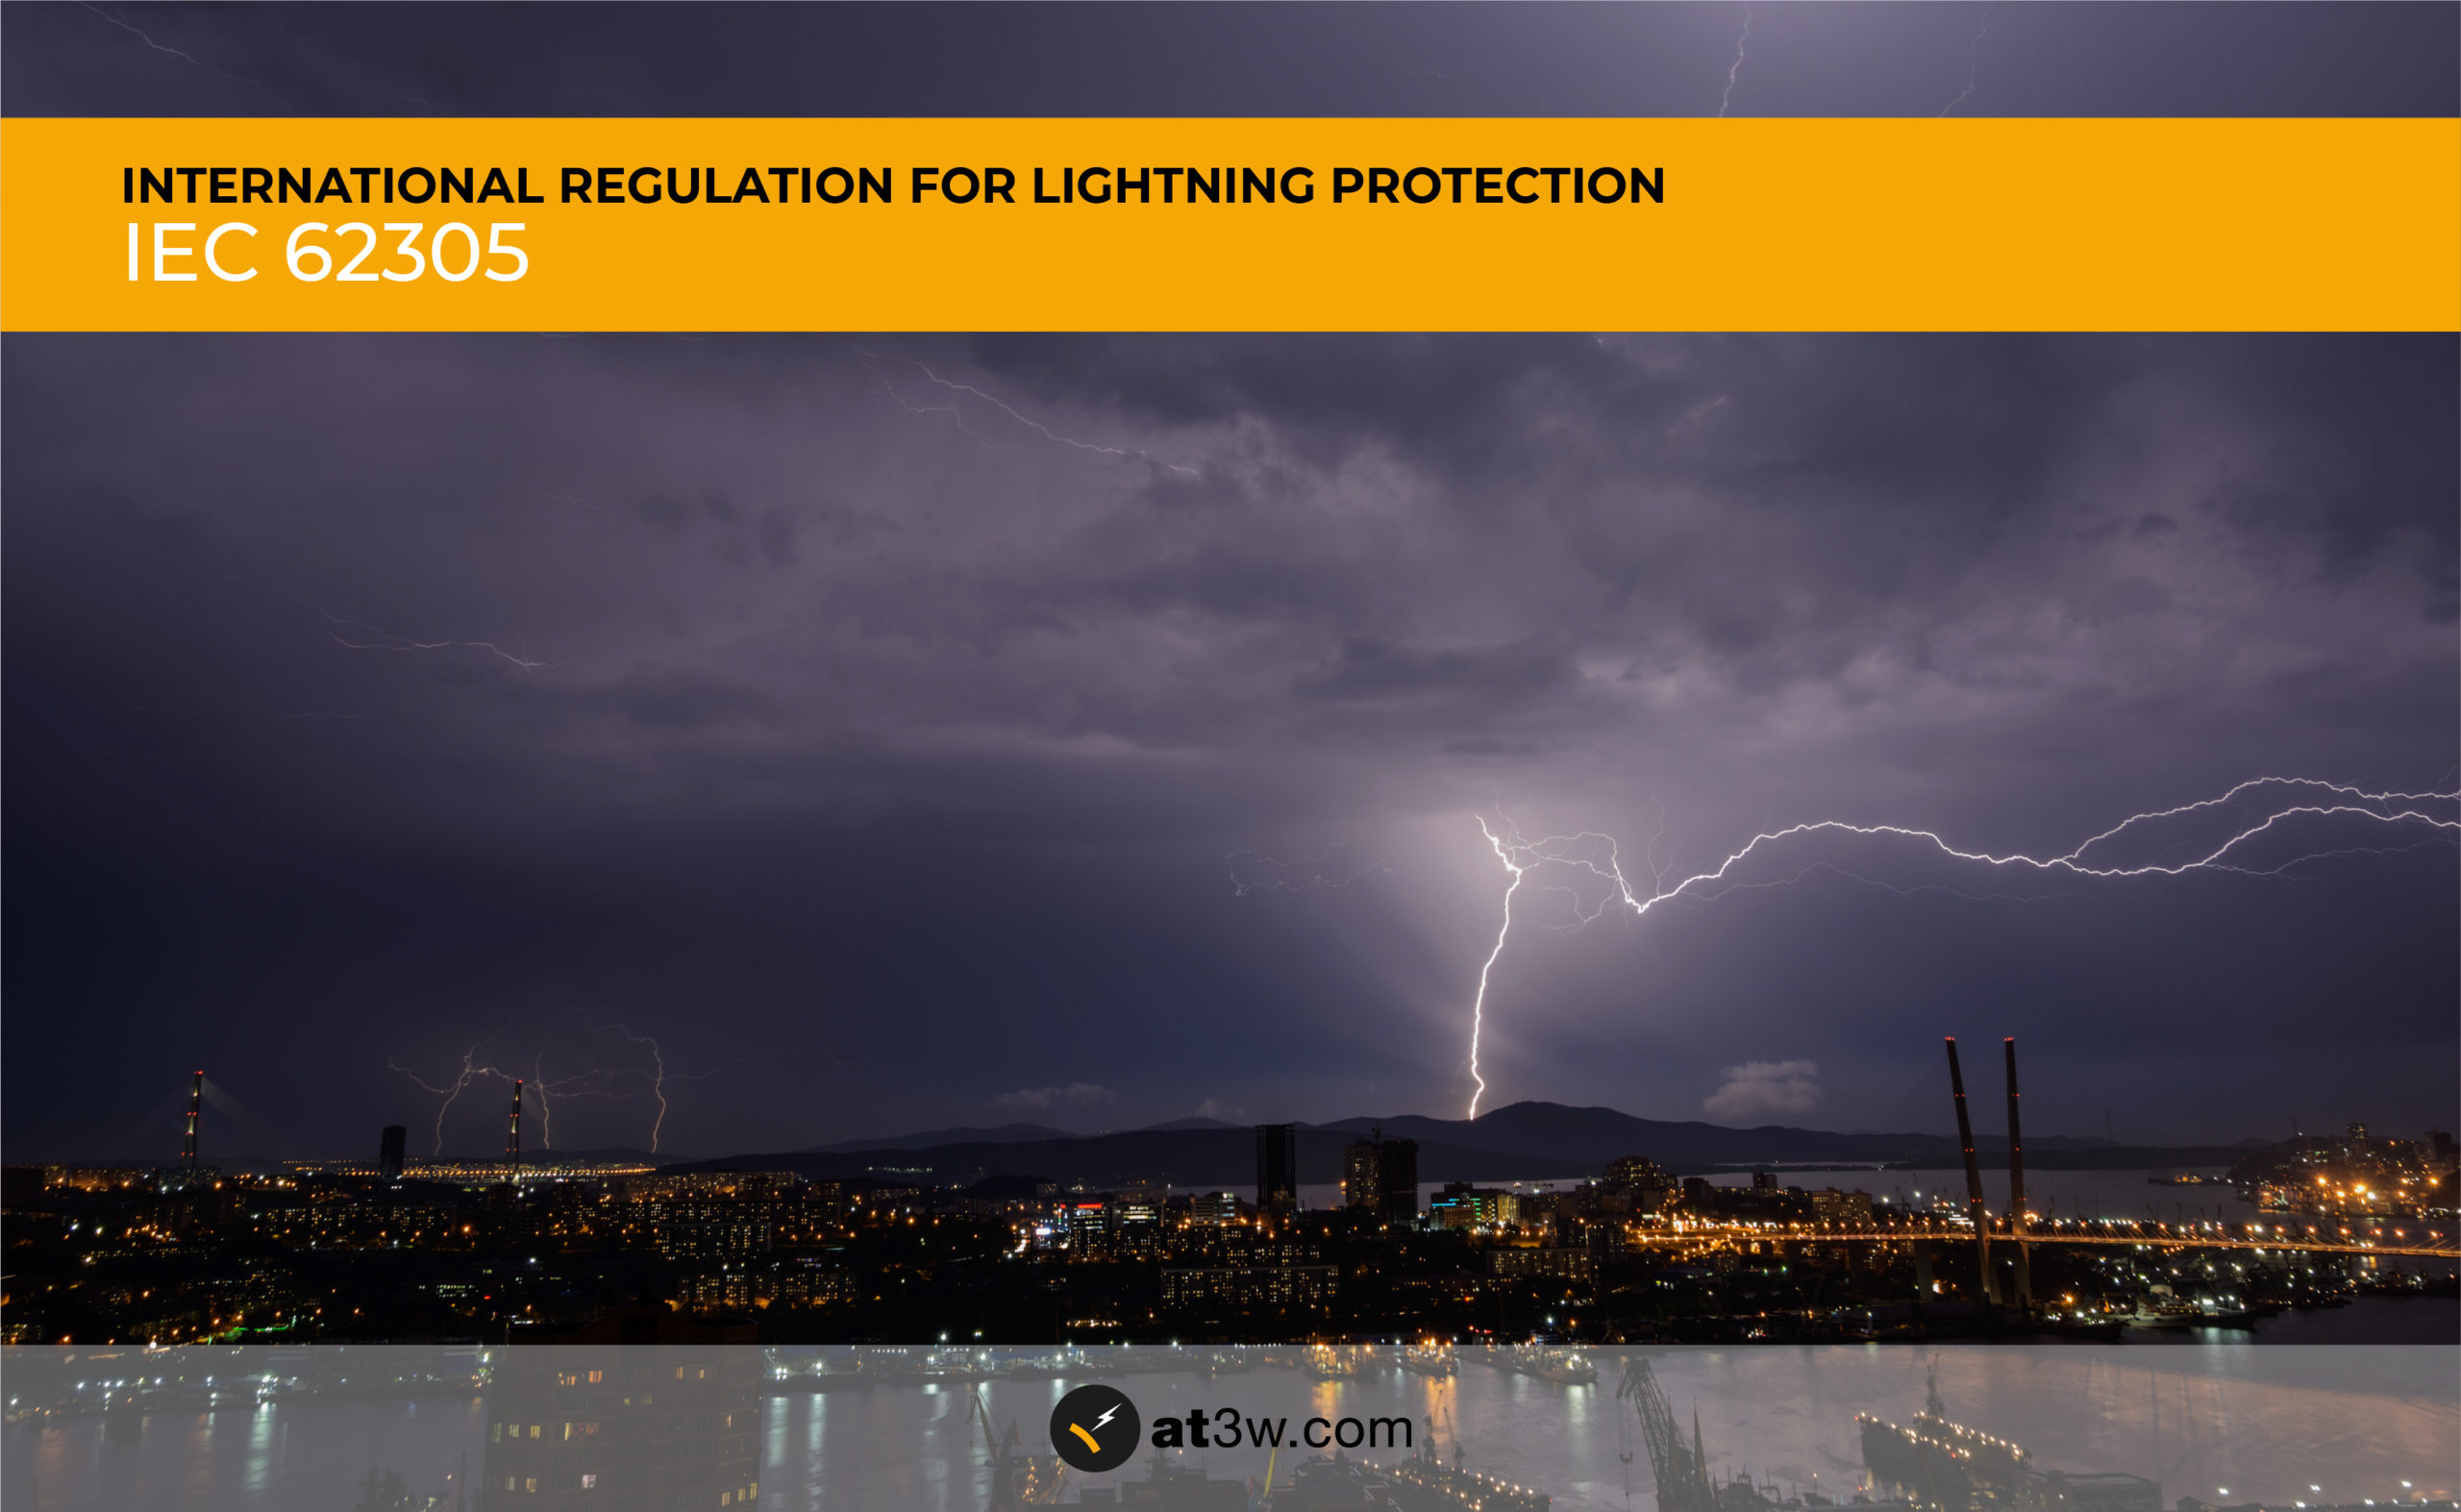 Aplicaciones Tecnológicas was present at the review of the international regulation IEC 62305 for lightning protection